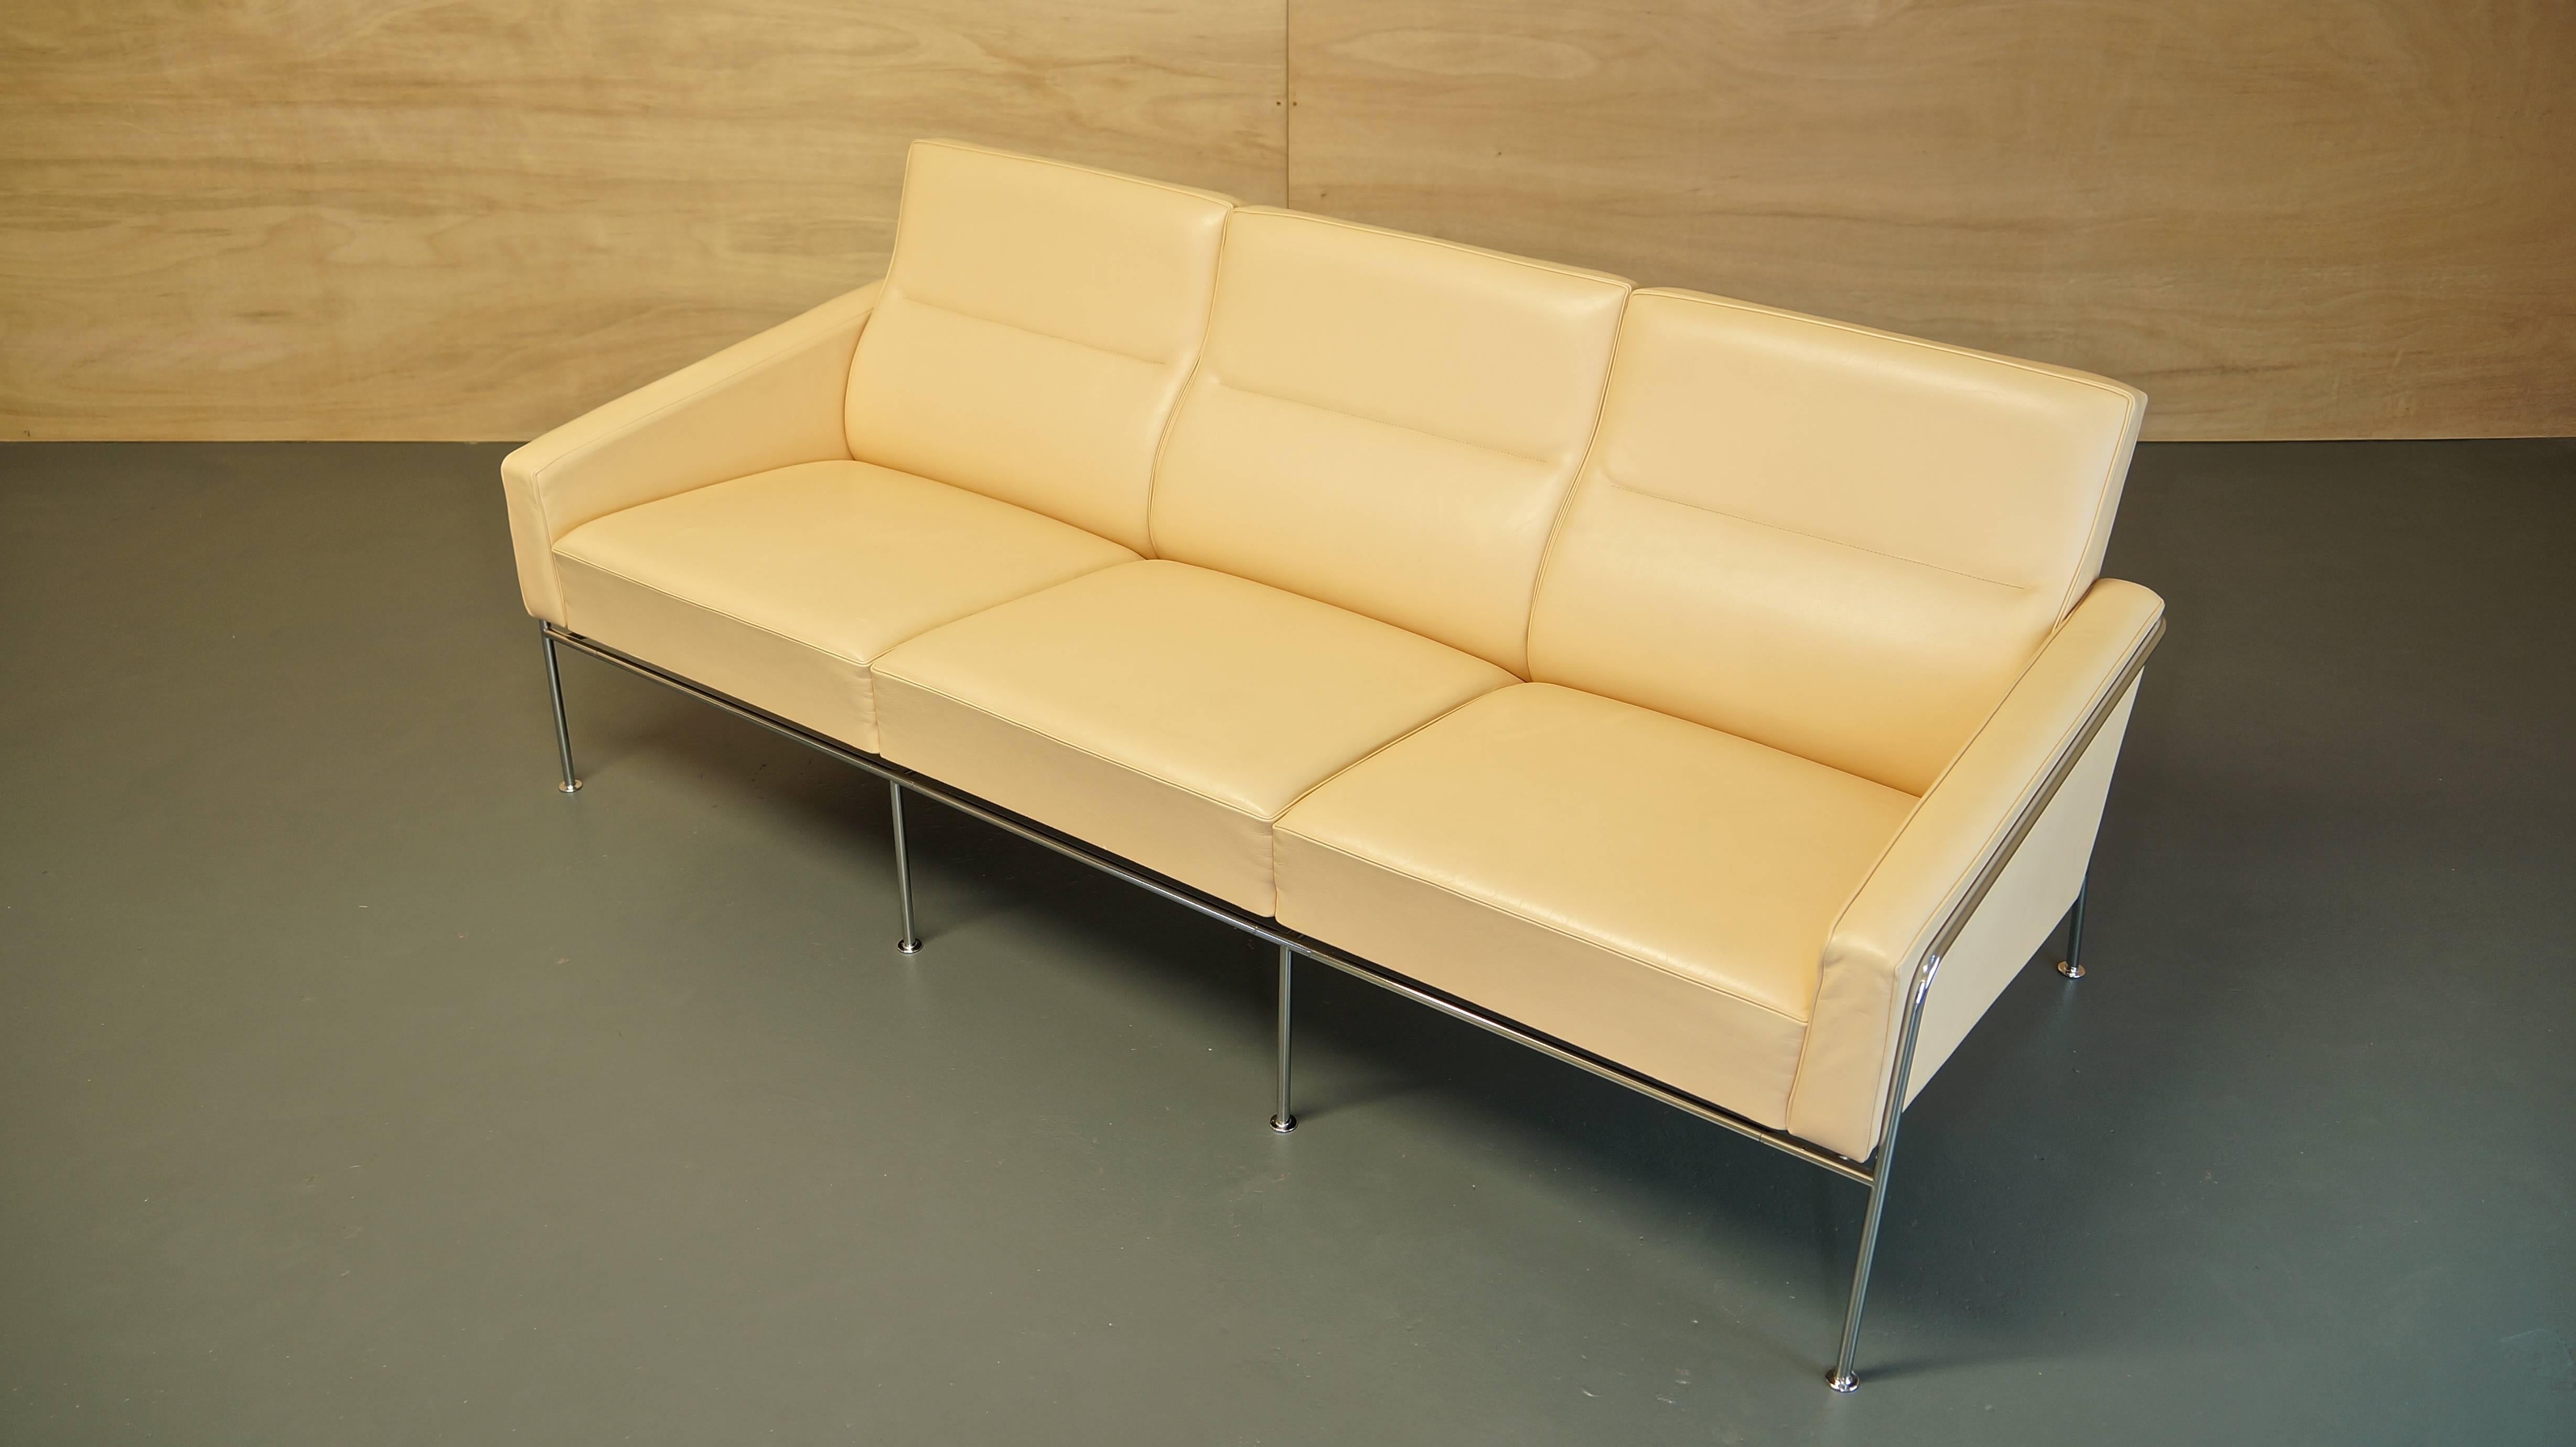 Steel Danish Vintage Arne Jacobsen Series 3303 Leather Sofa by Fritz Hansen For Sale